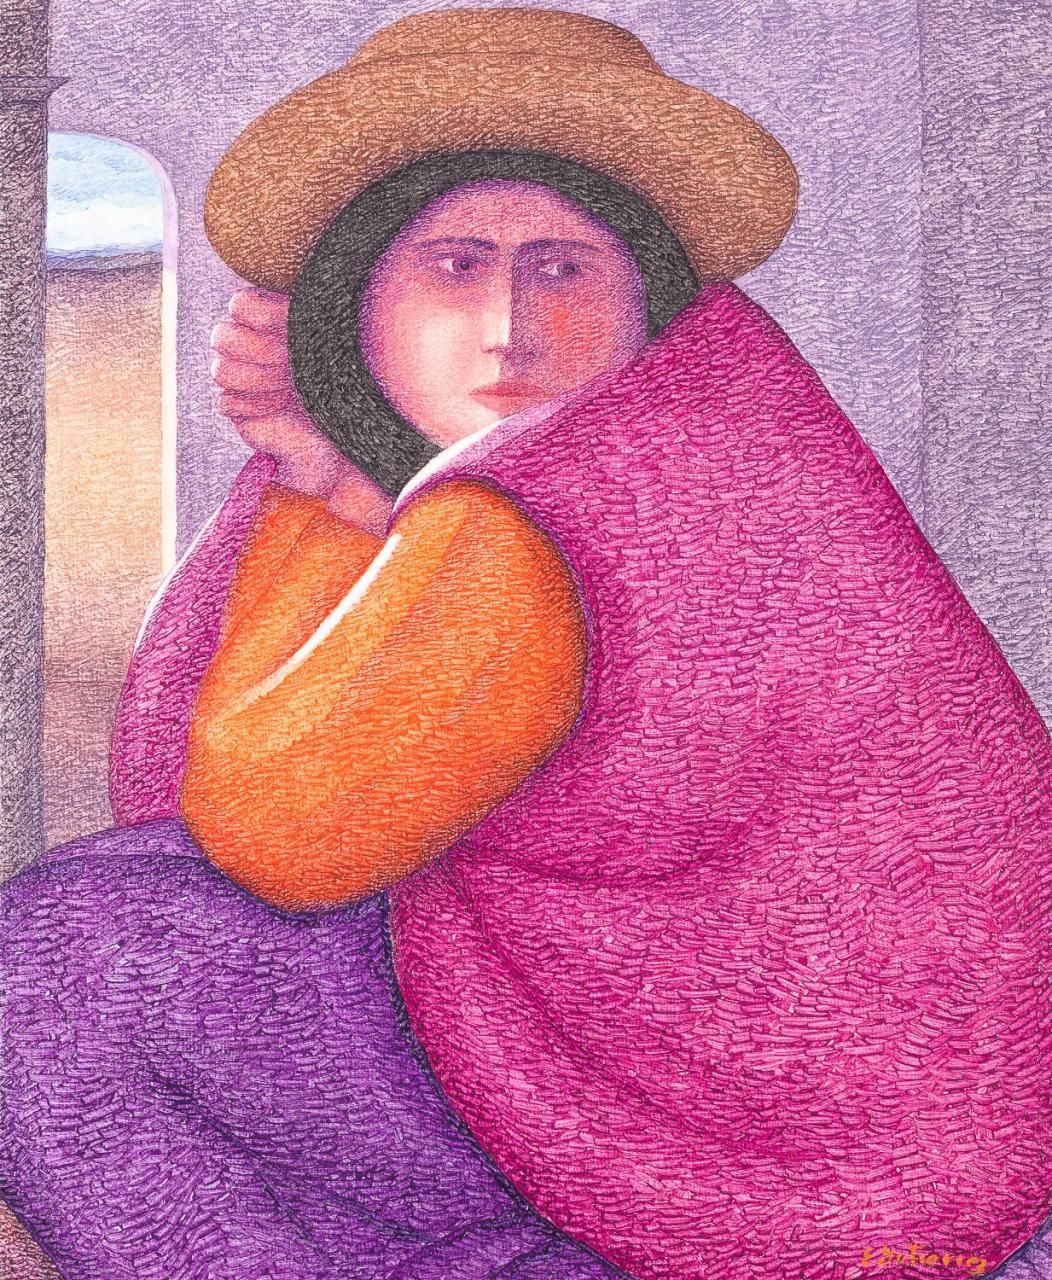 ERNESTO GUTIÉRREZ 戴帽子的女士
布面丙烯画
73 x 60 cm
右下角有签名。